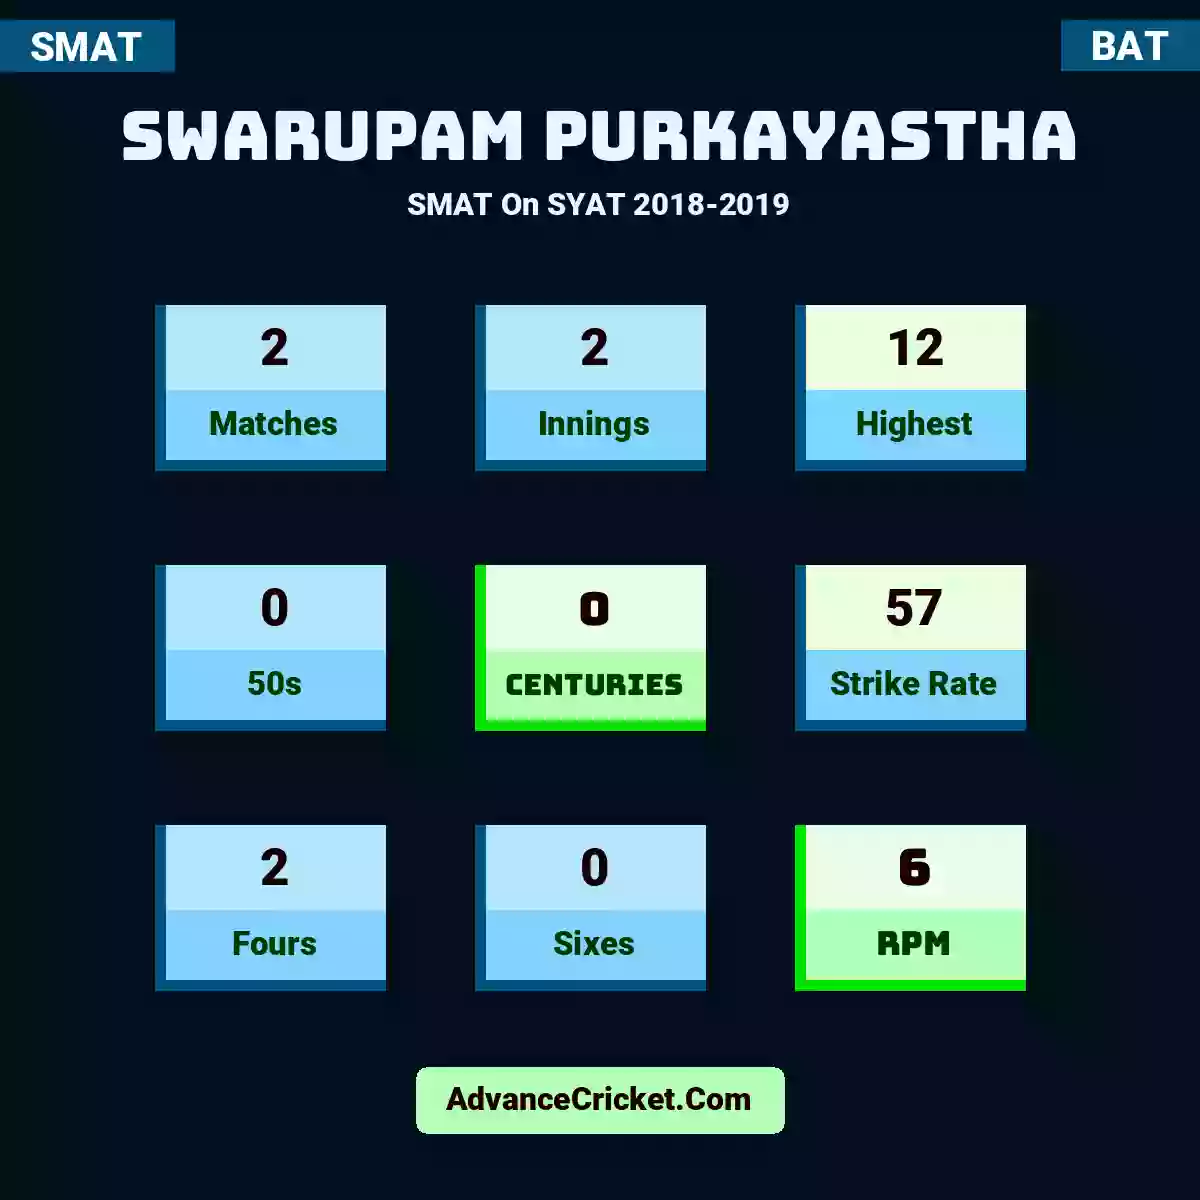 Swarupam Purkayastha SMAT  On SYAT 2018-2019, Swarupam Purkayastha played 2 matches, scored 12 runs as highest, 0 half-centuries, and 0 centuries, with a strike rate of 57. S.Purkayastha hit 2 fours and 0 sixes, with an RPM of 6.